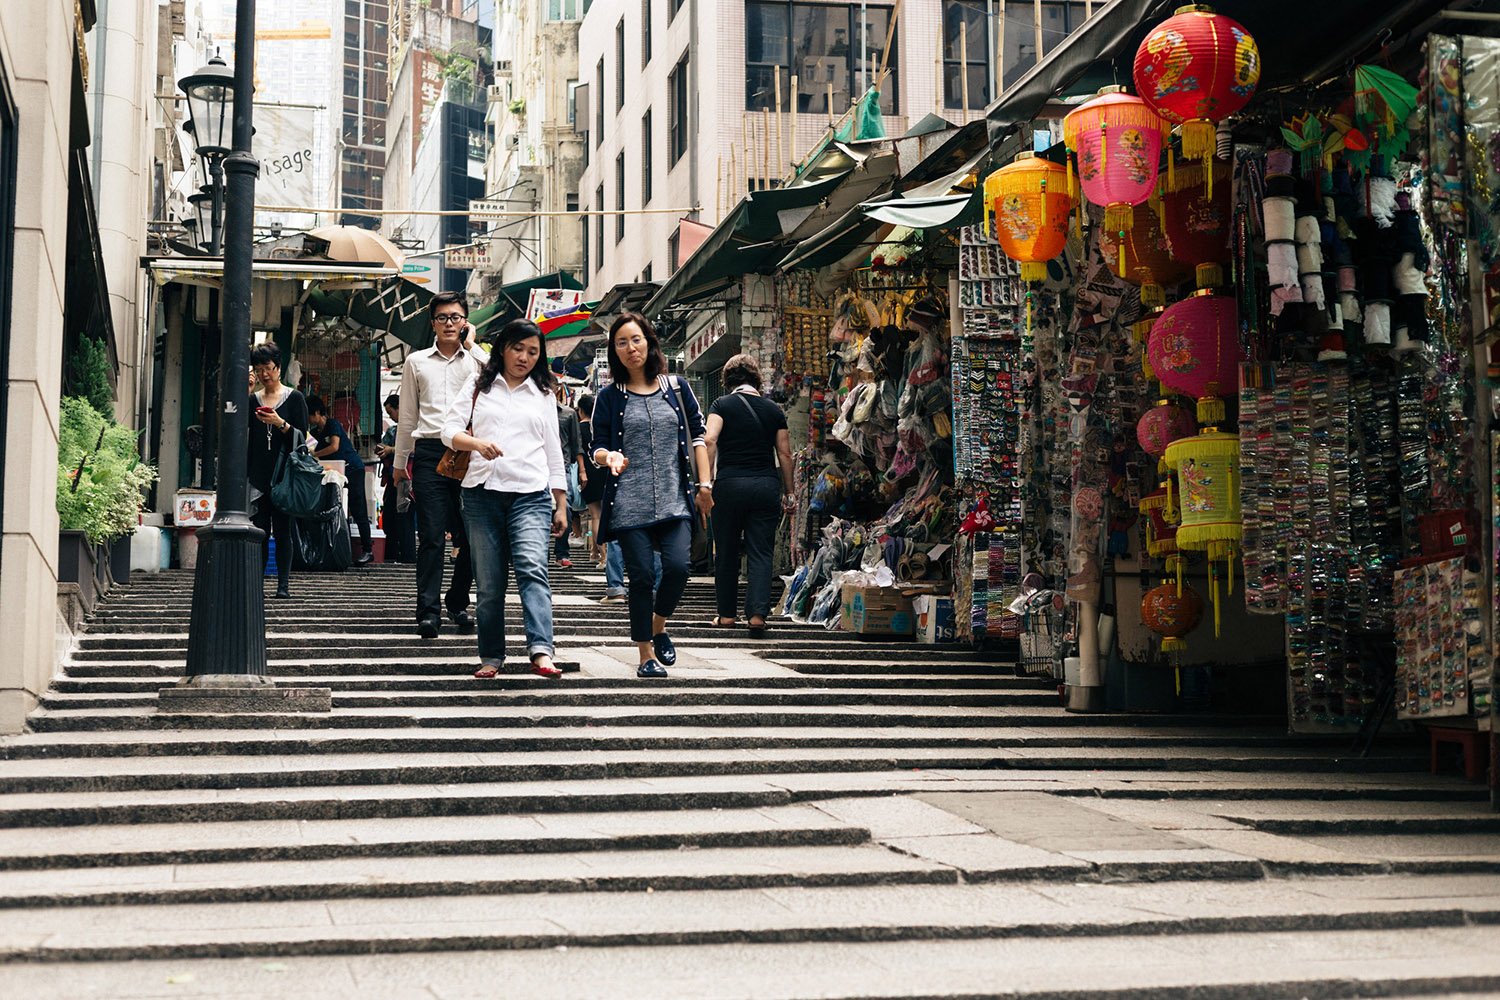 Pedestrians navigating the steps in Mid-Levels, Hong Kong